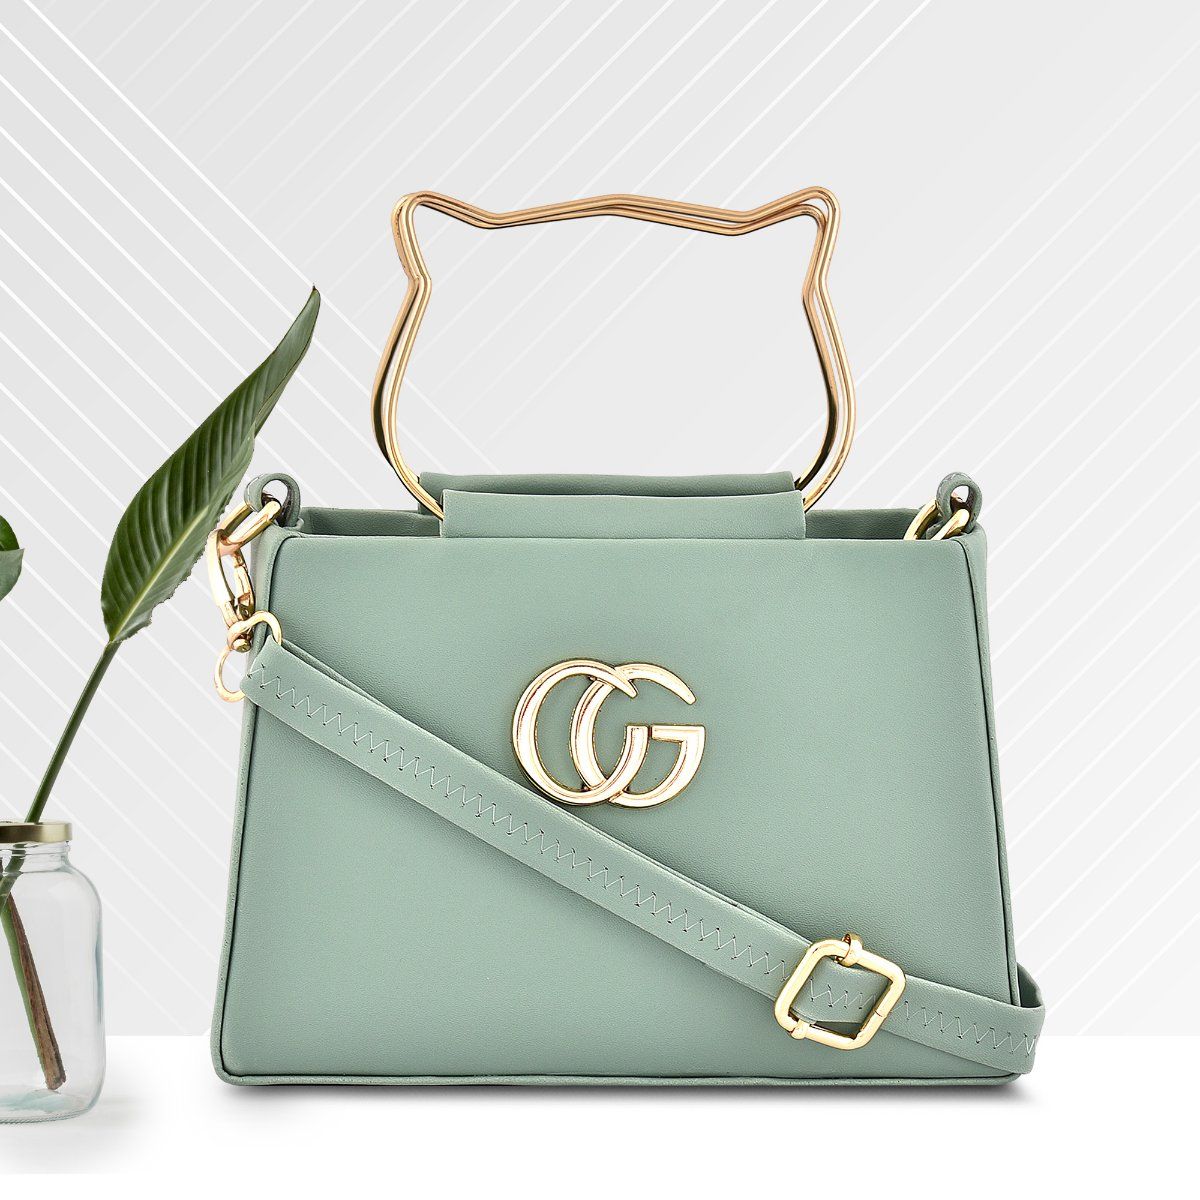 MP) Small Green Faux Leather Purse Handbag Tote Bag w/Silver & Green Studs  | eBay